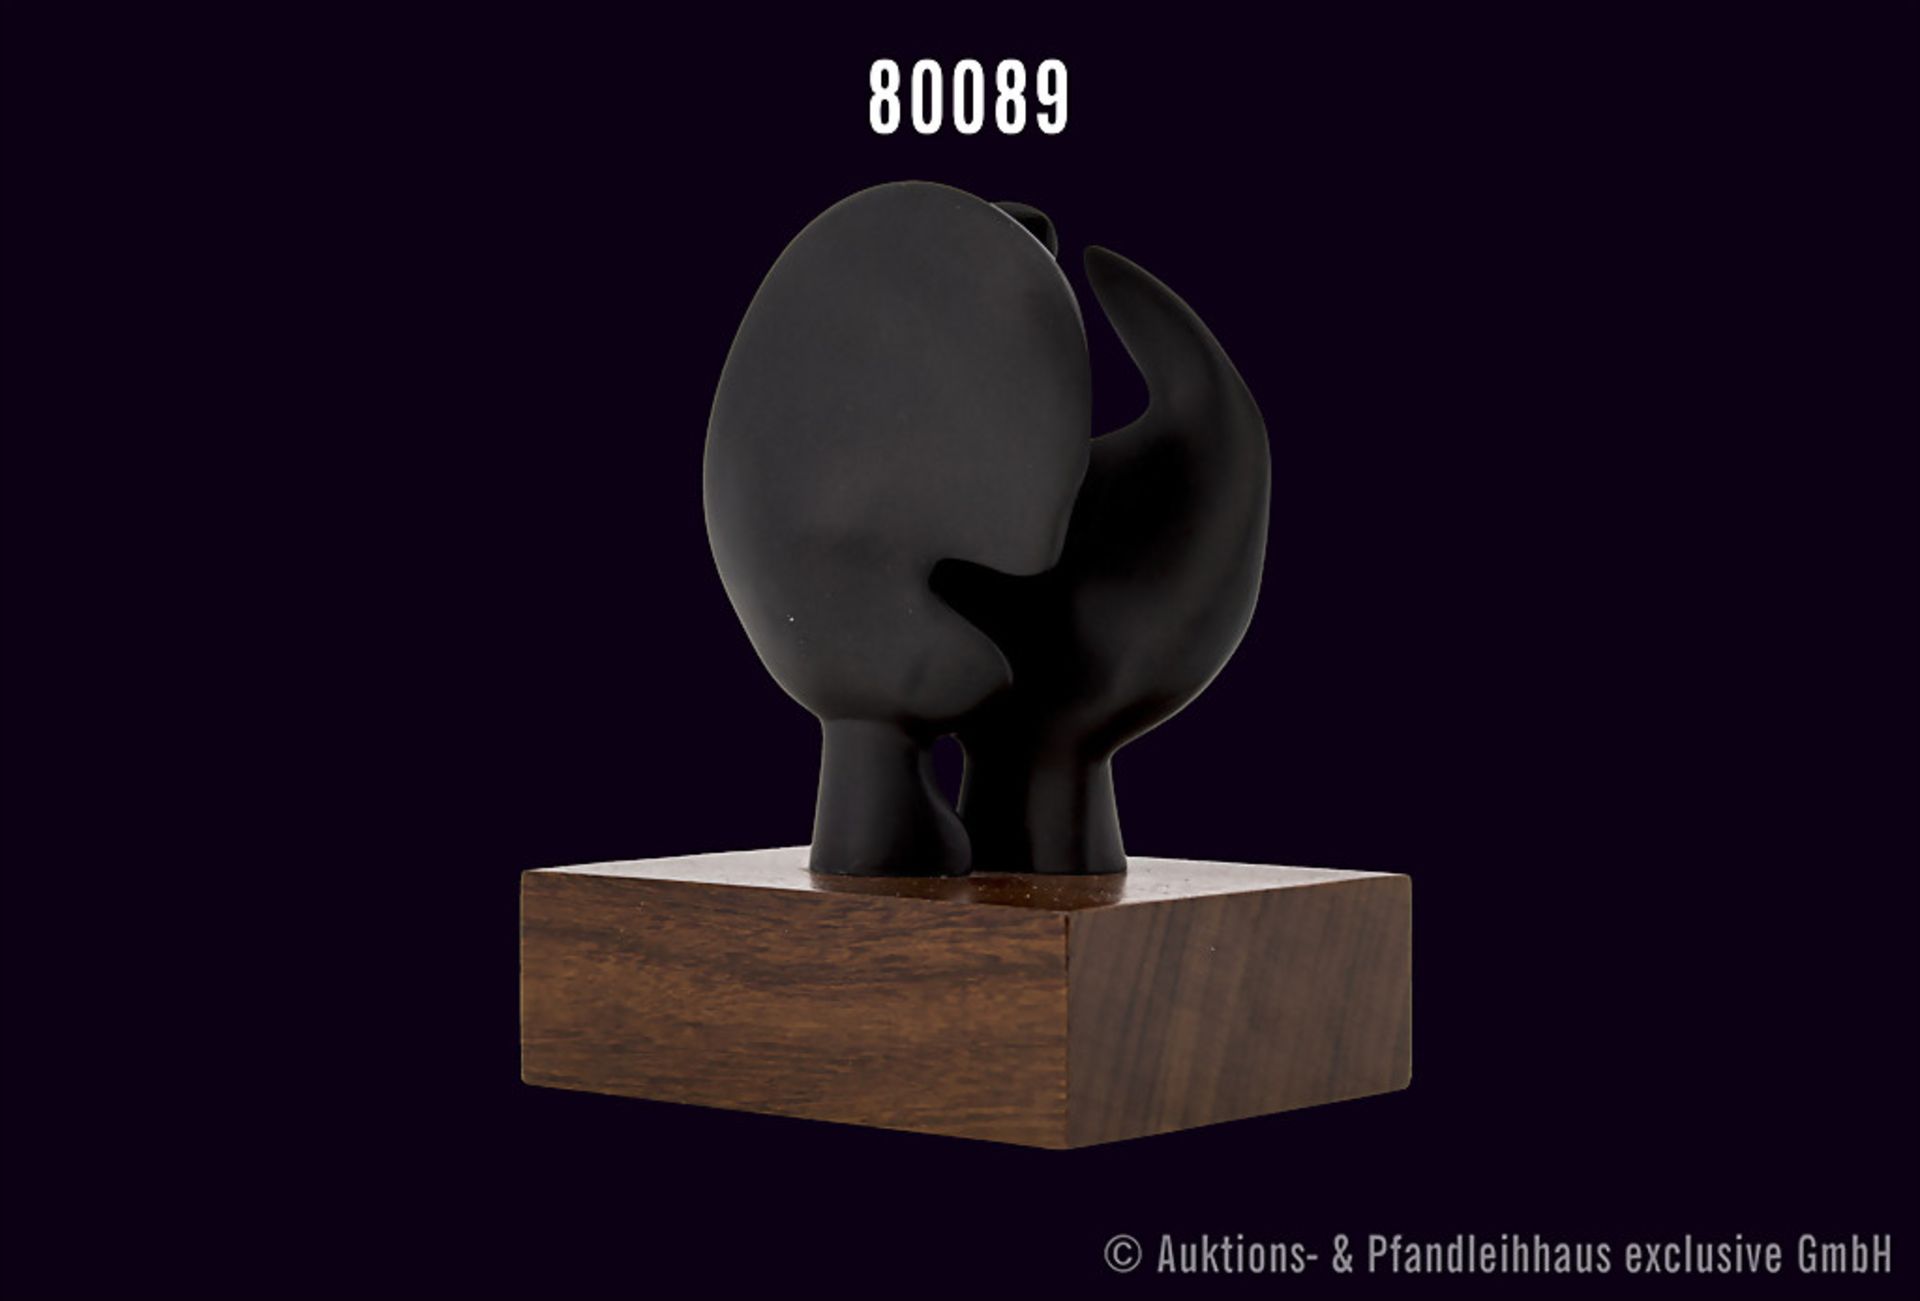 Rosenthal Porzellan, Skulptur von Henry Moore, Titel "Moonhead", schwarzes Porzellan auf Holzsockel,